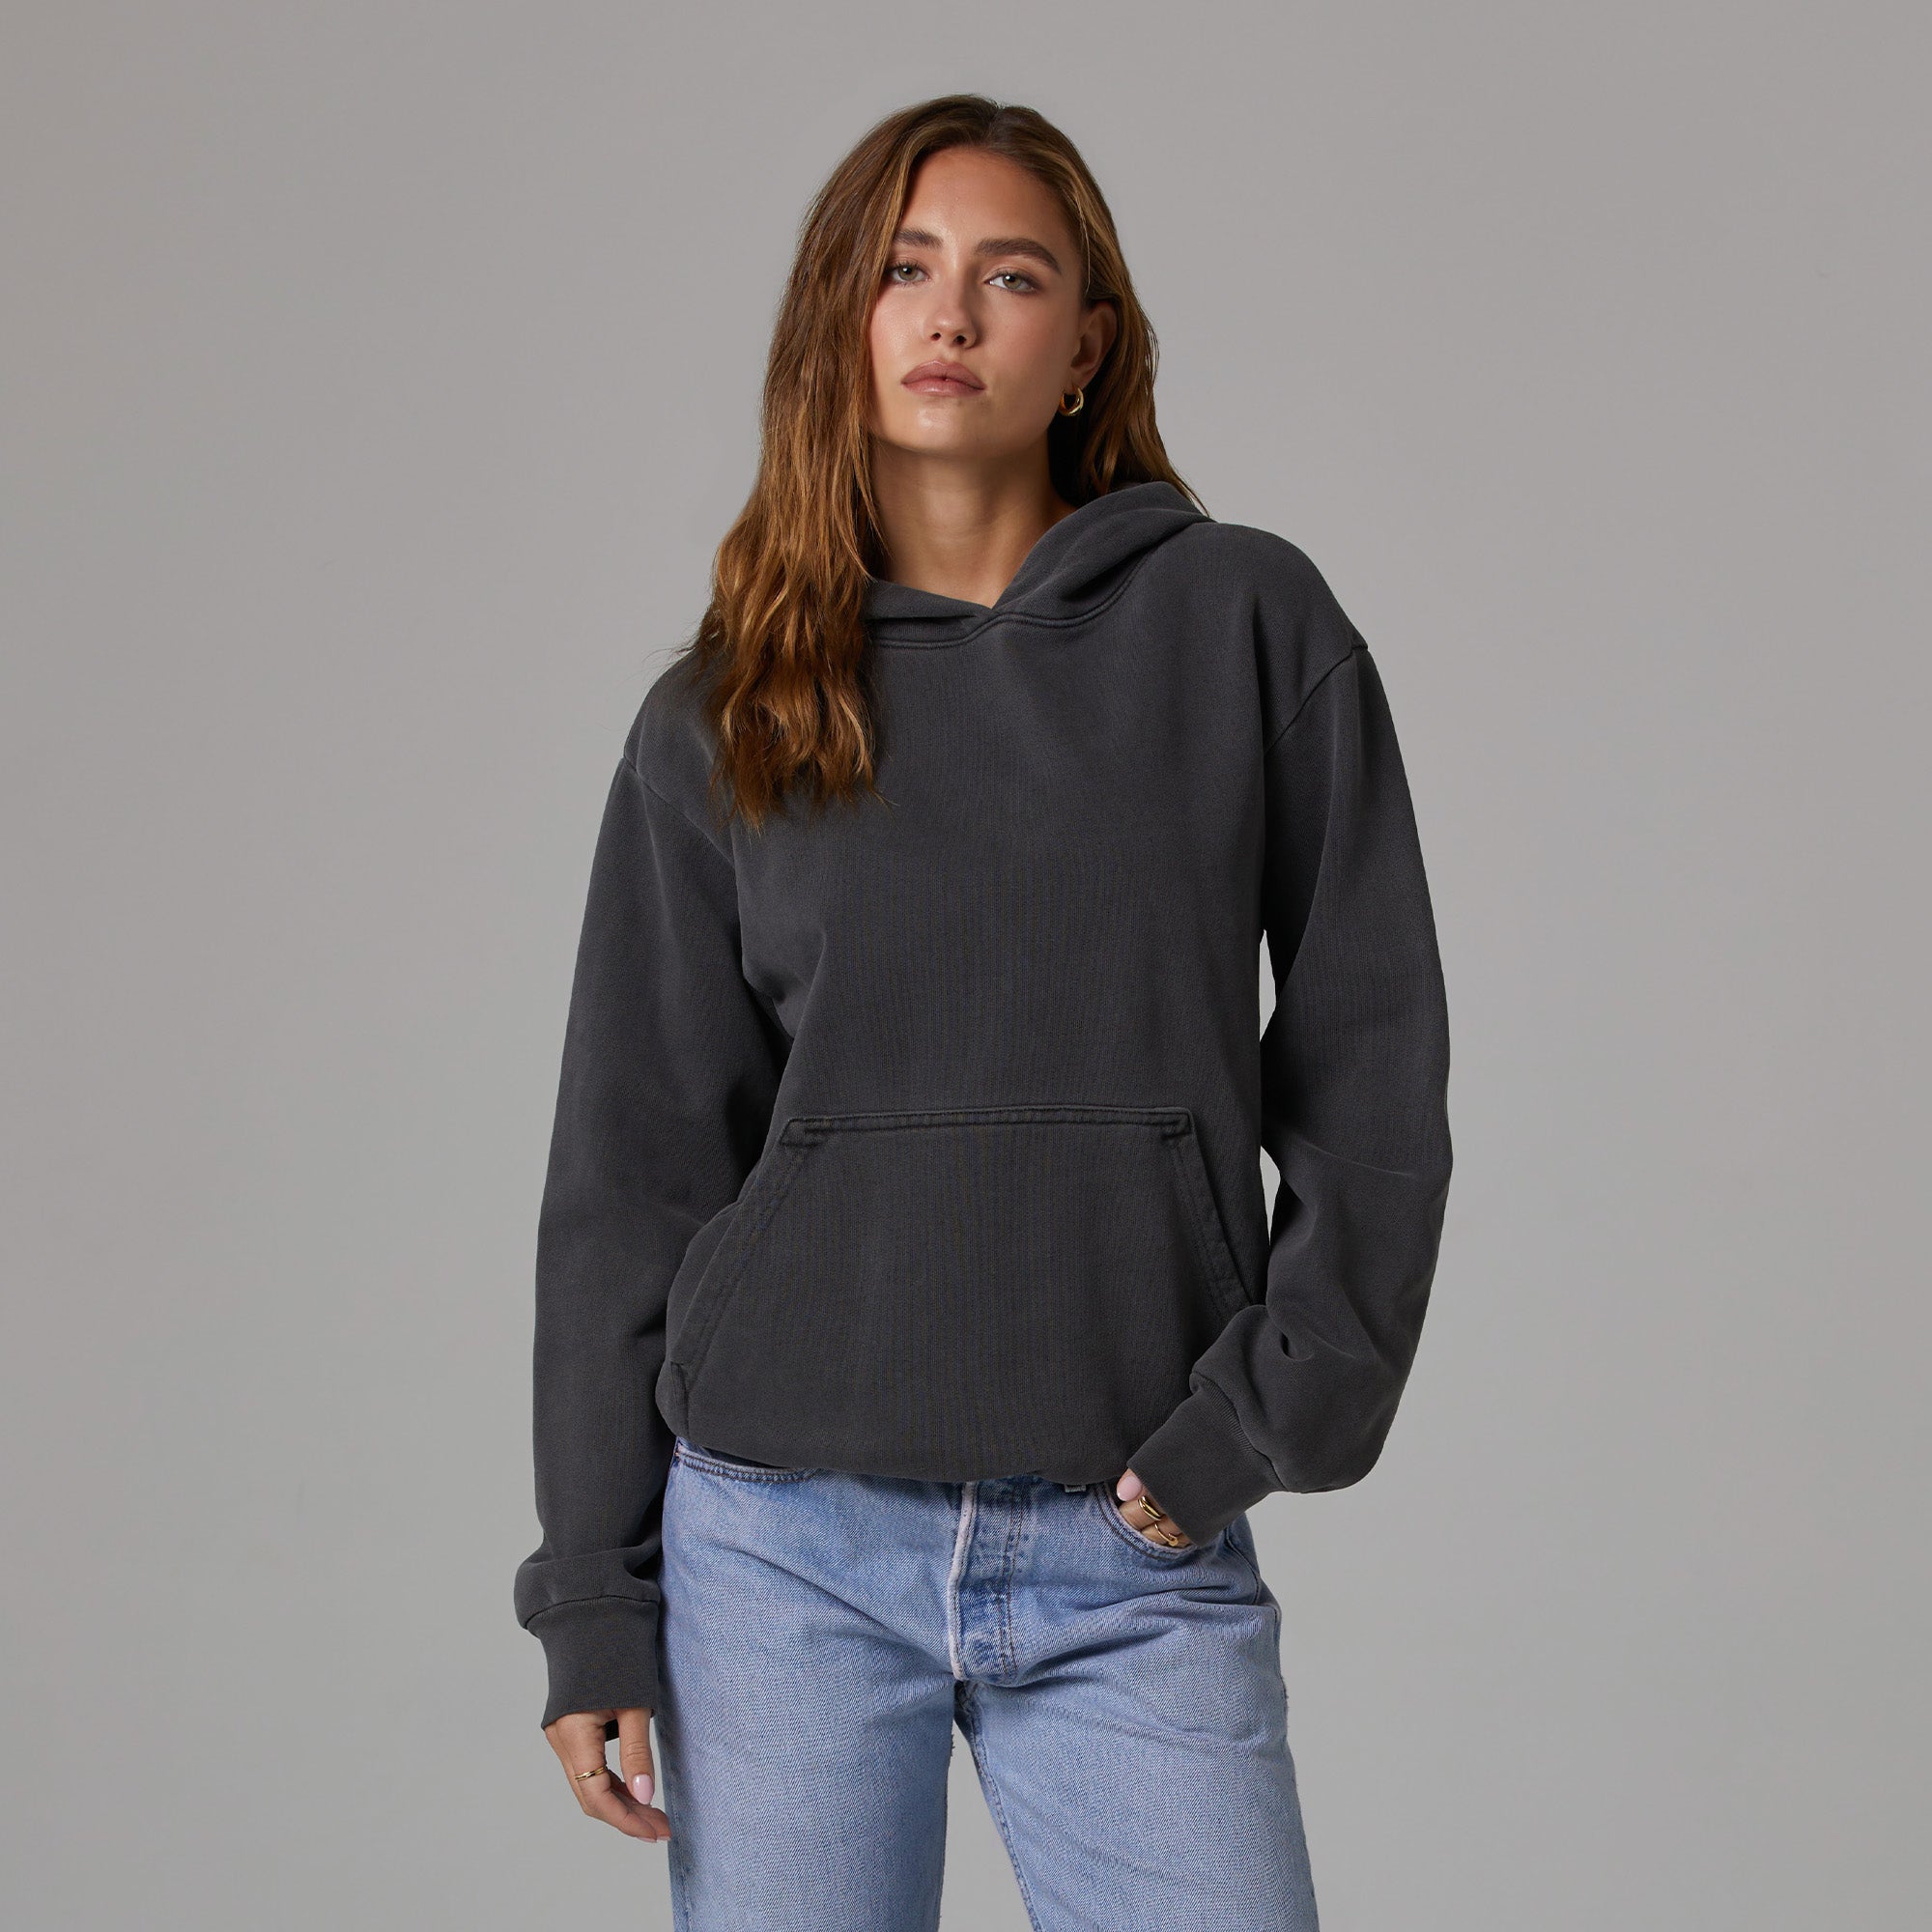 Shop Women's Hoodies, Ladies Sweatshirts